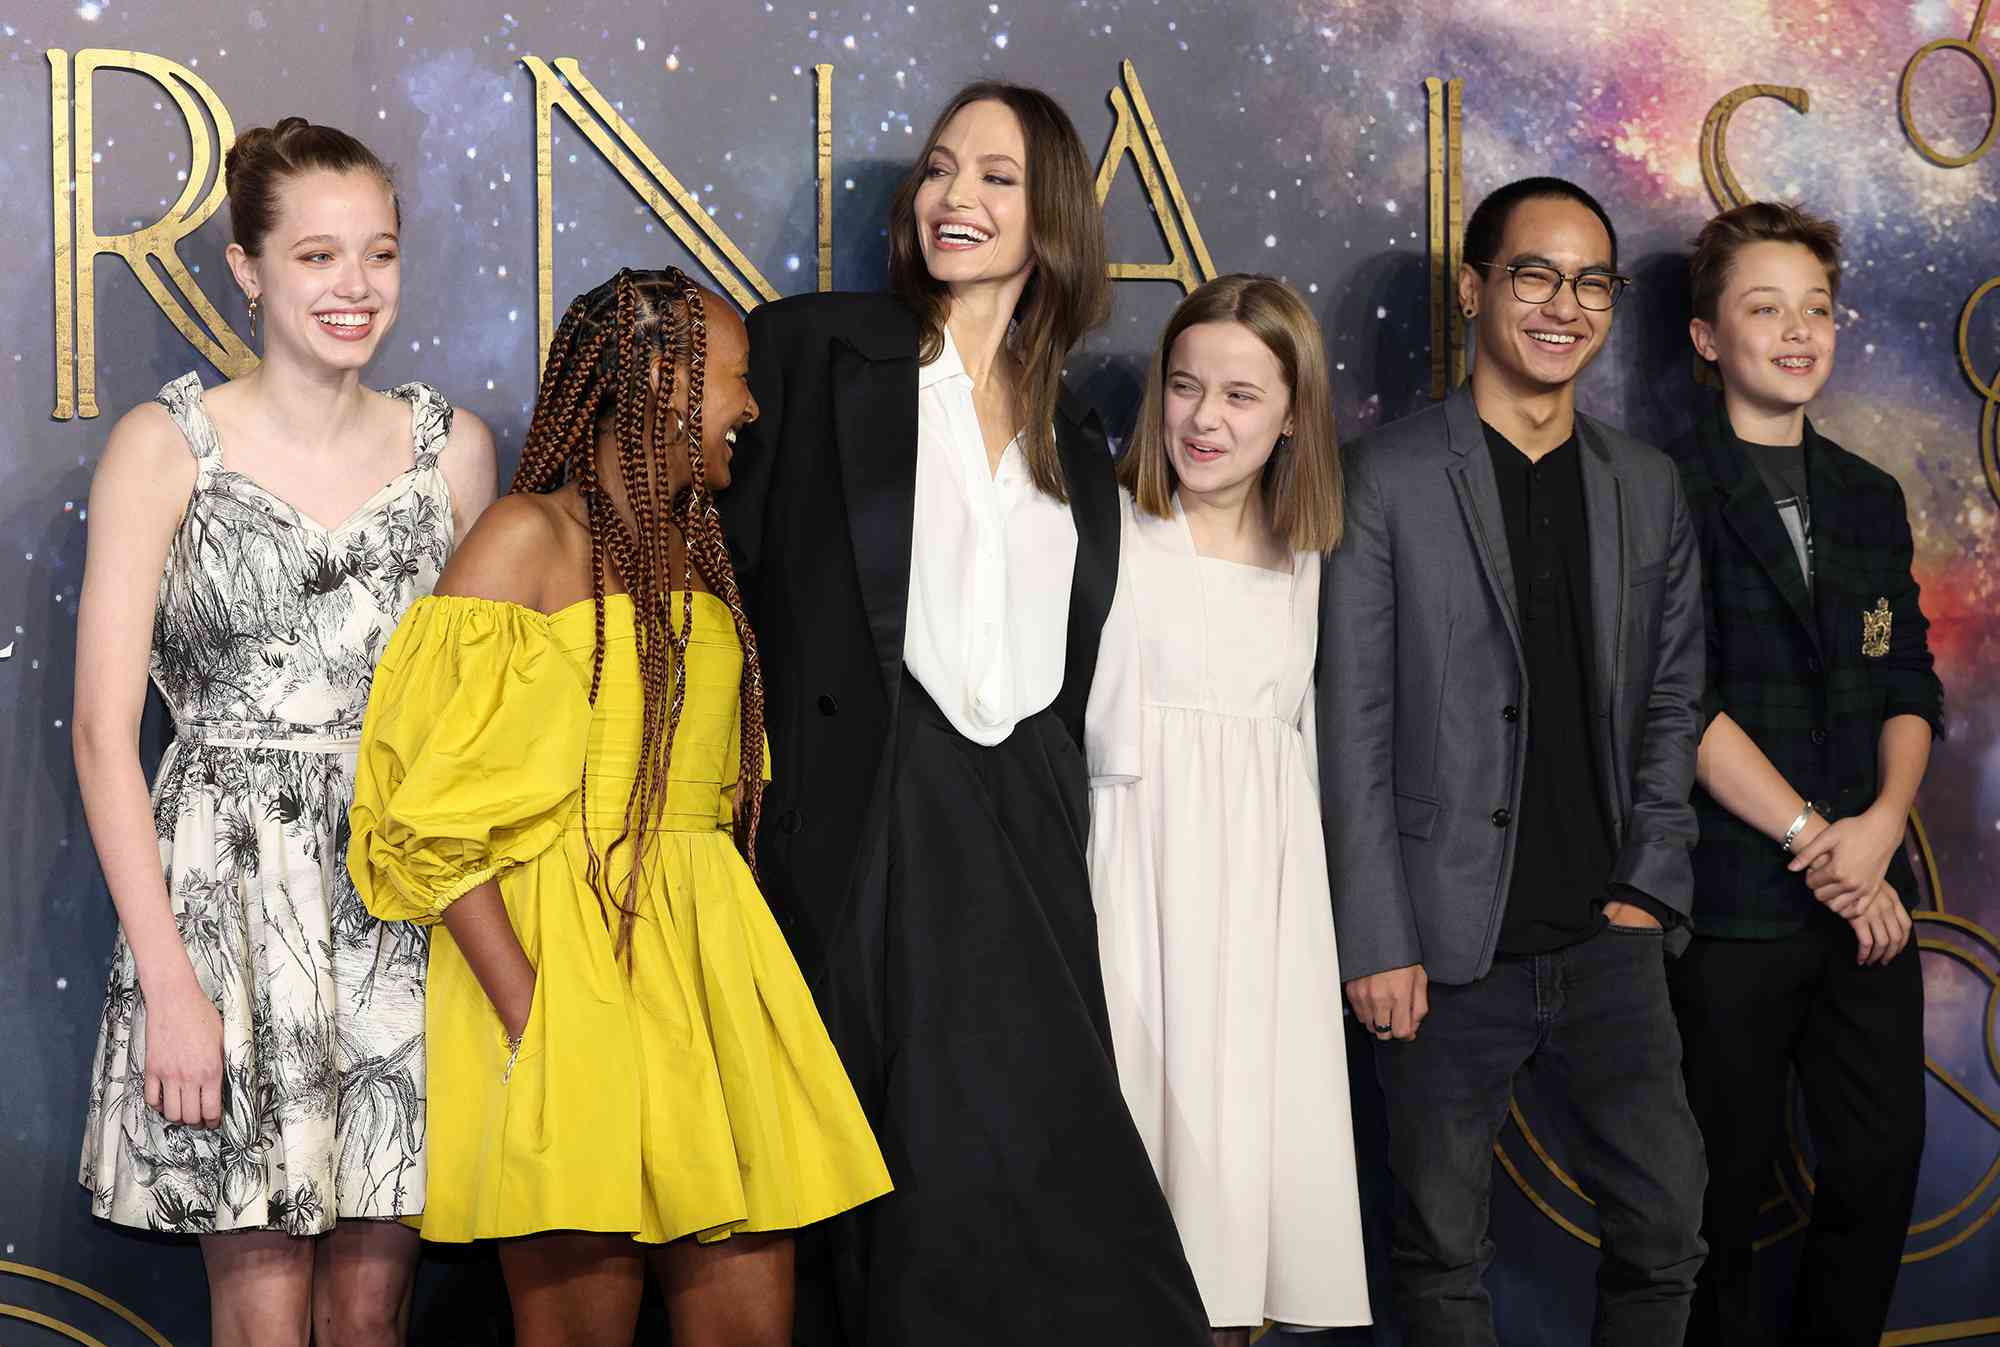 Shiloh Jolie-Pitt Chooses Legacy Over Name on Her 18th Birthday2